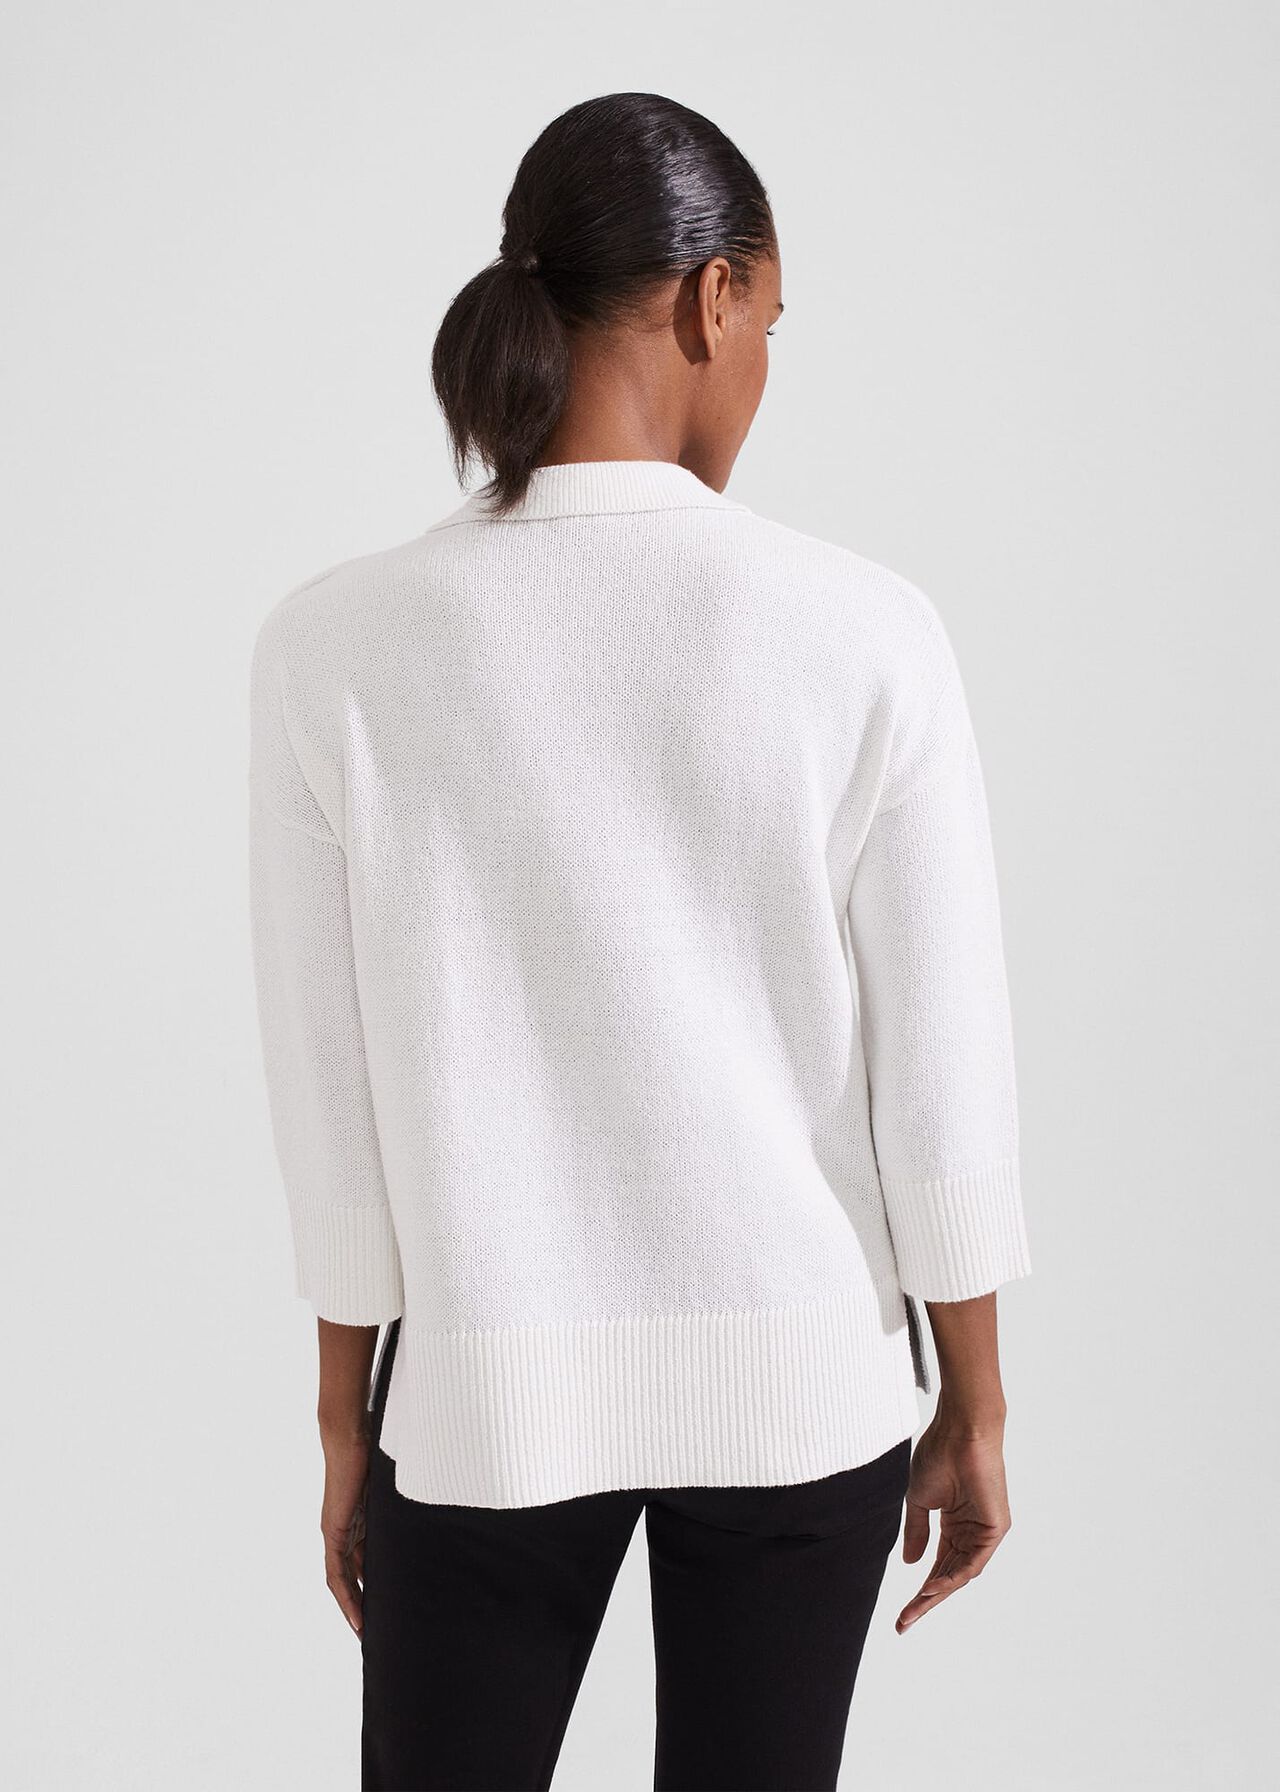 Madelyn Cotton Blend Sweater, Ivory, hi-res